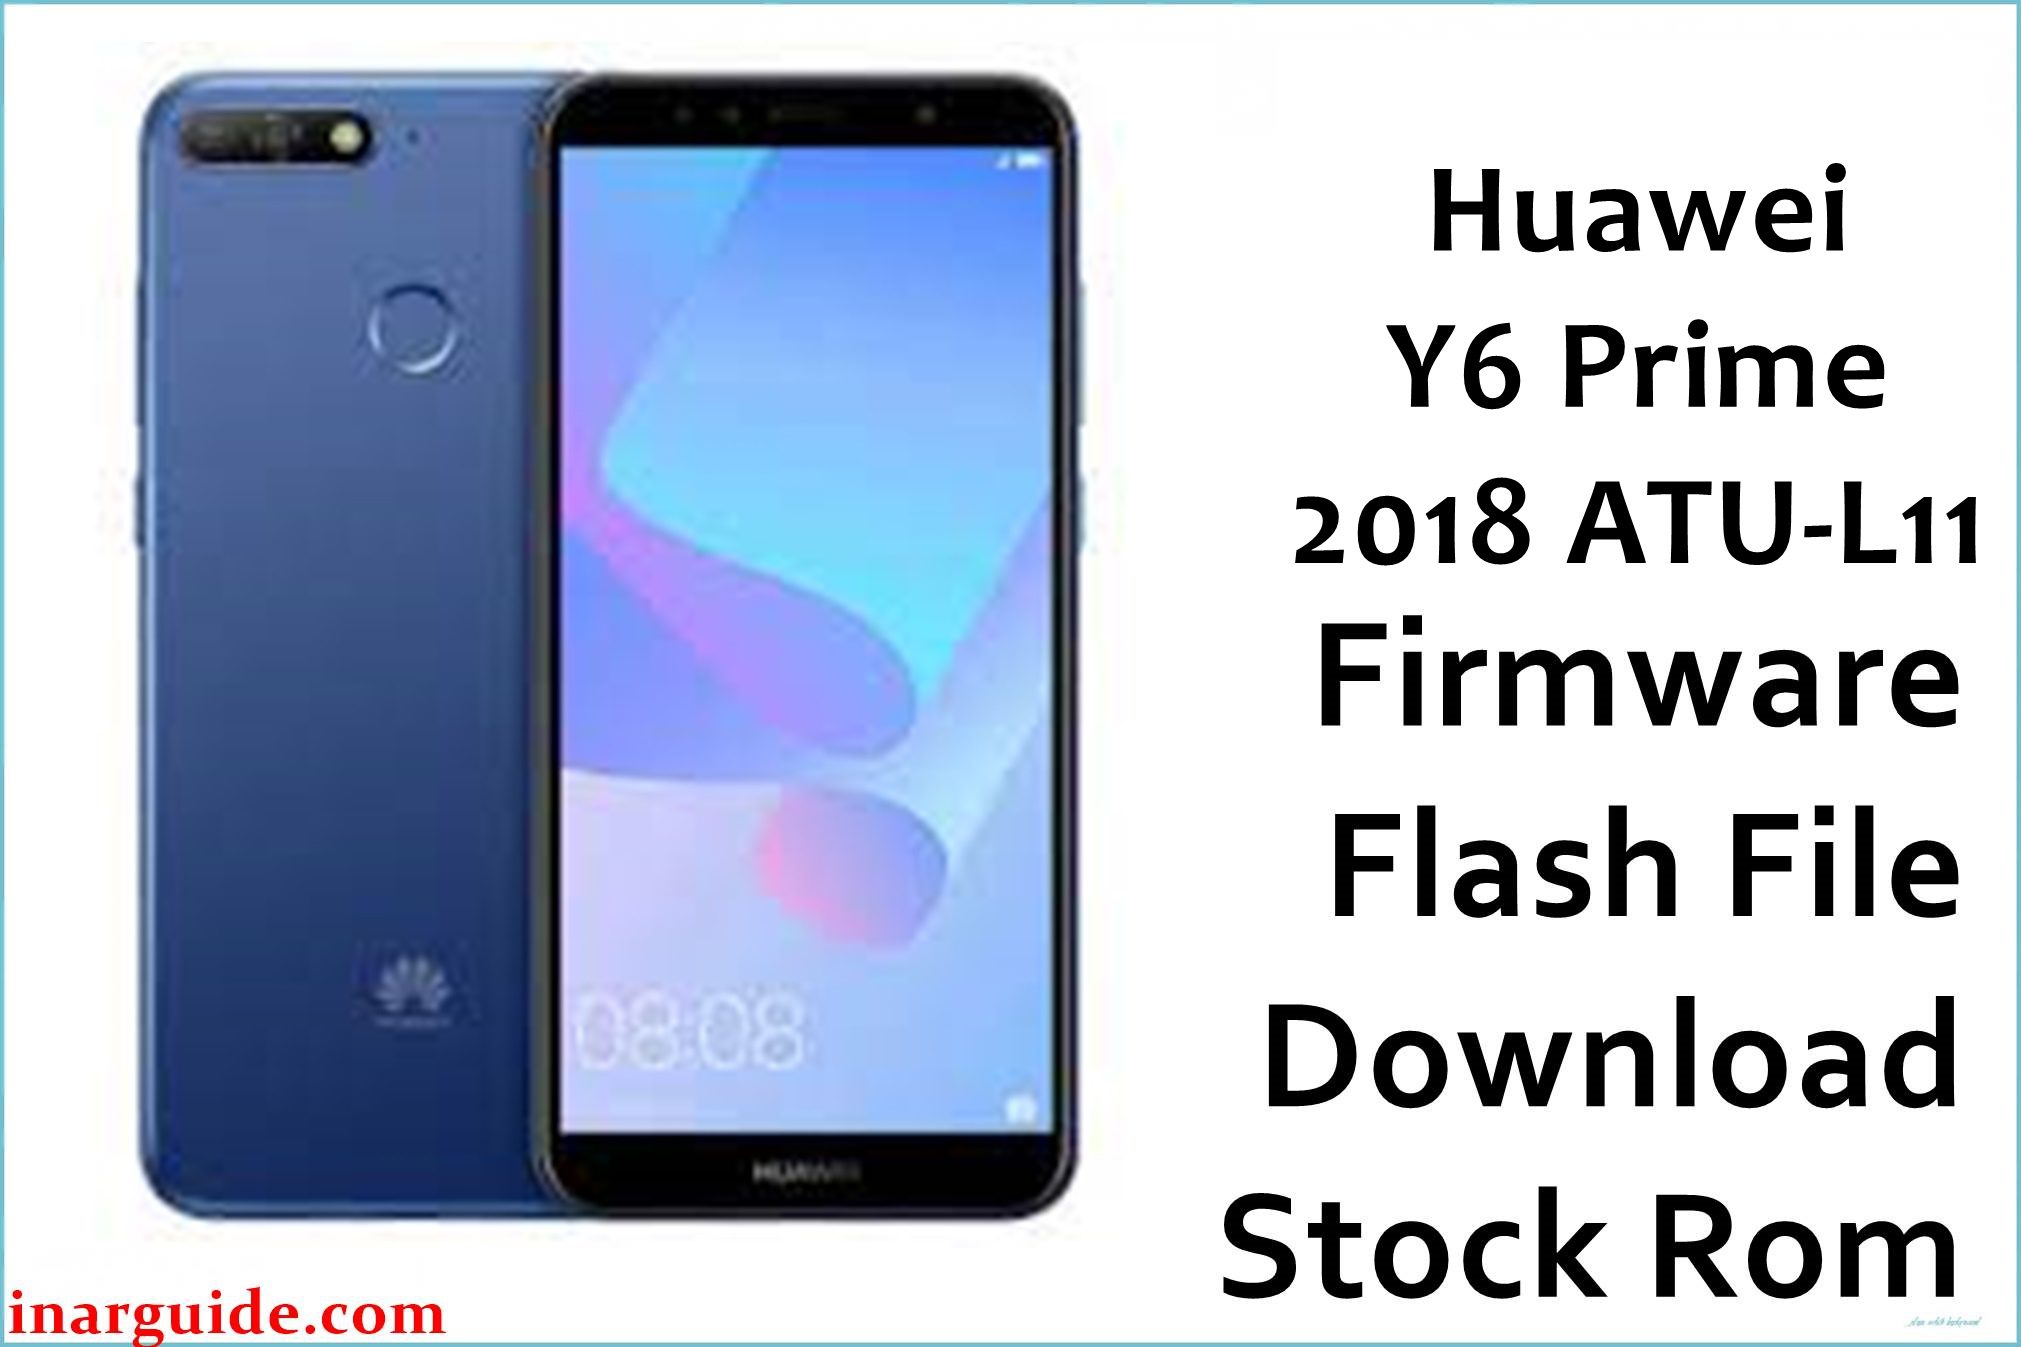 Huawei Y6 Prime 2018 ATU L11